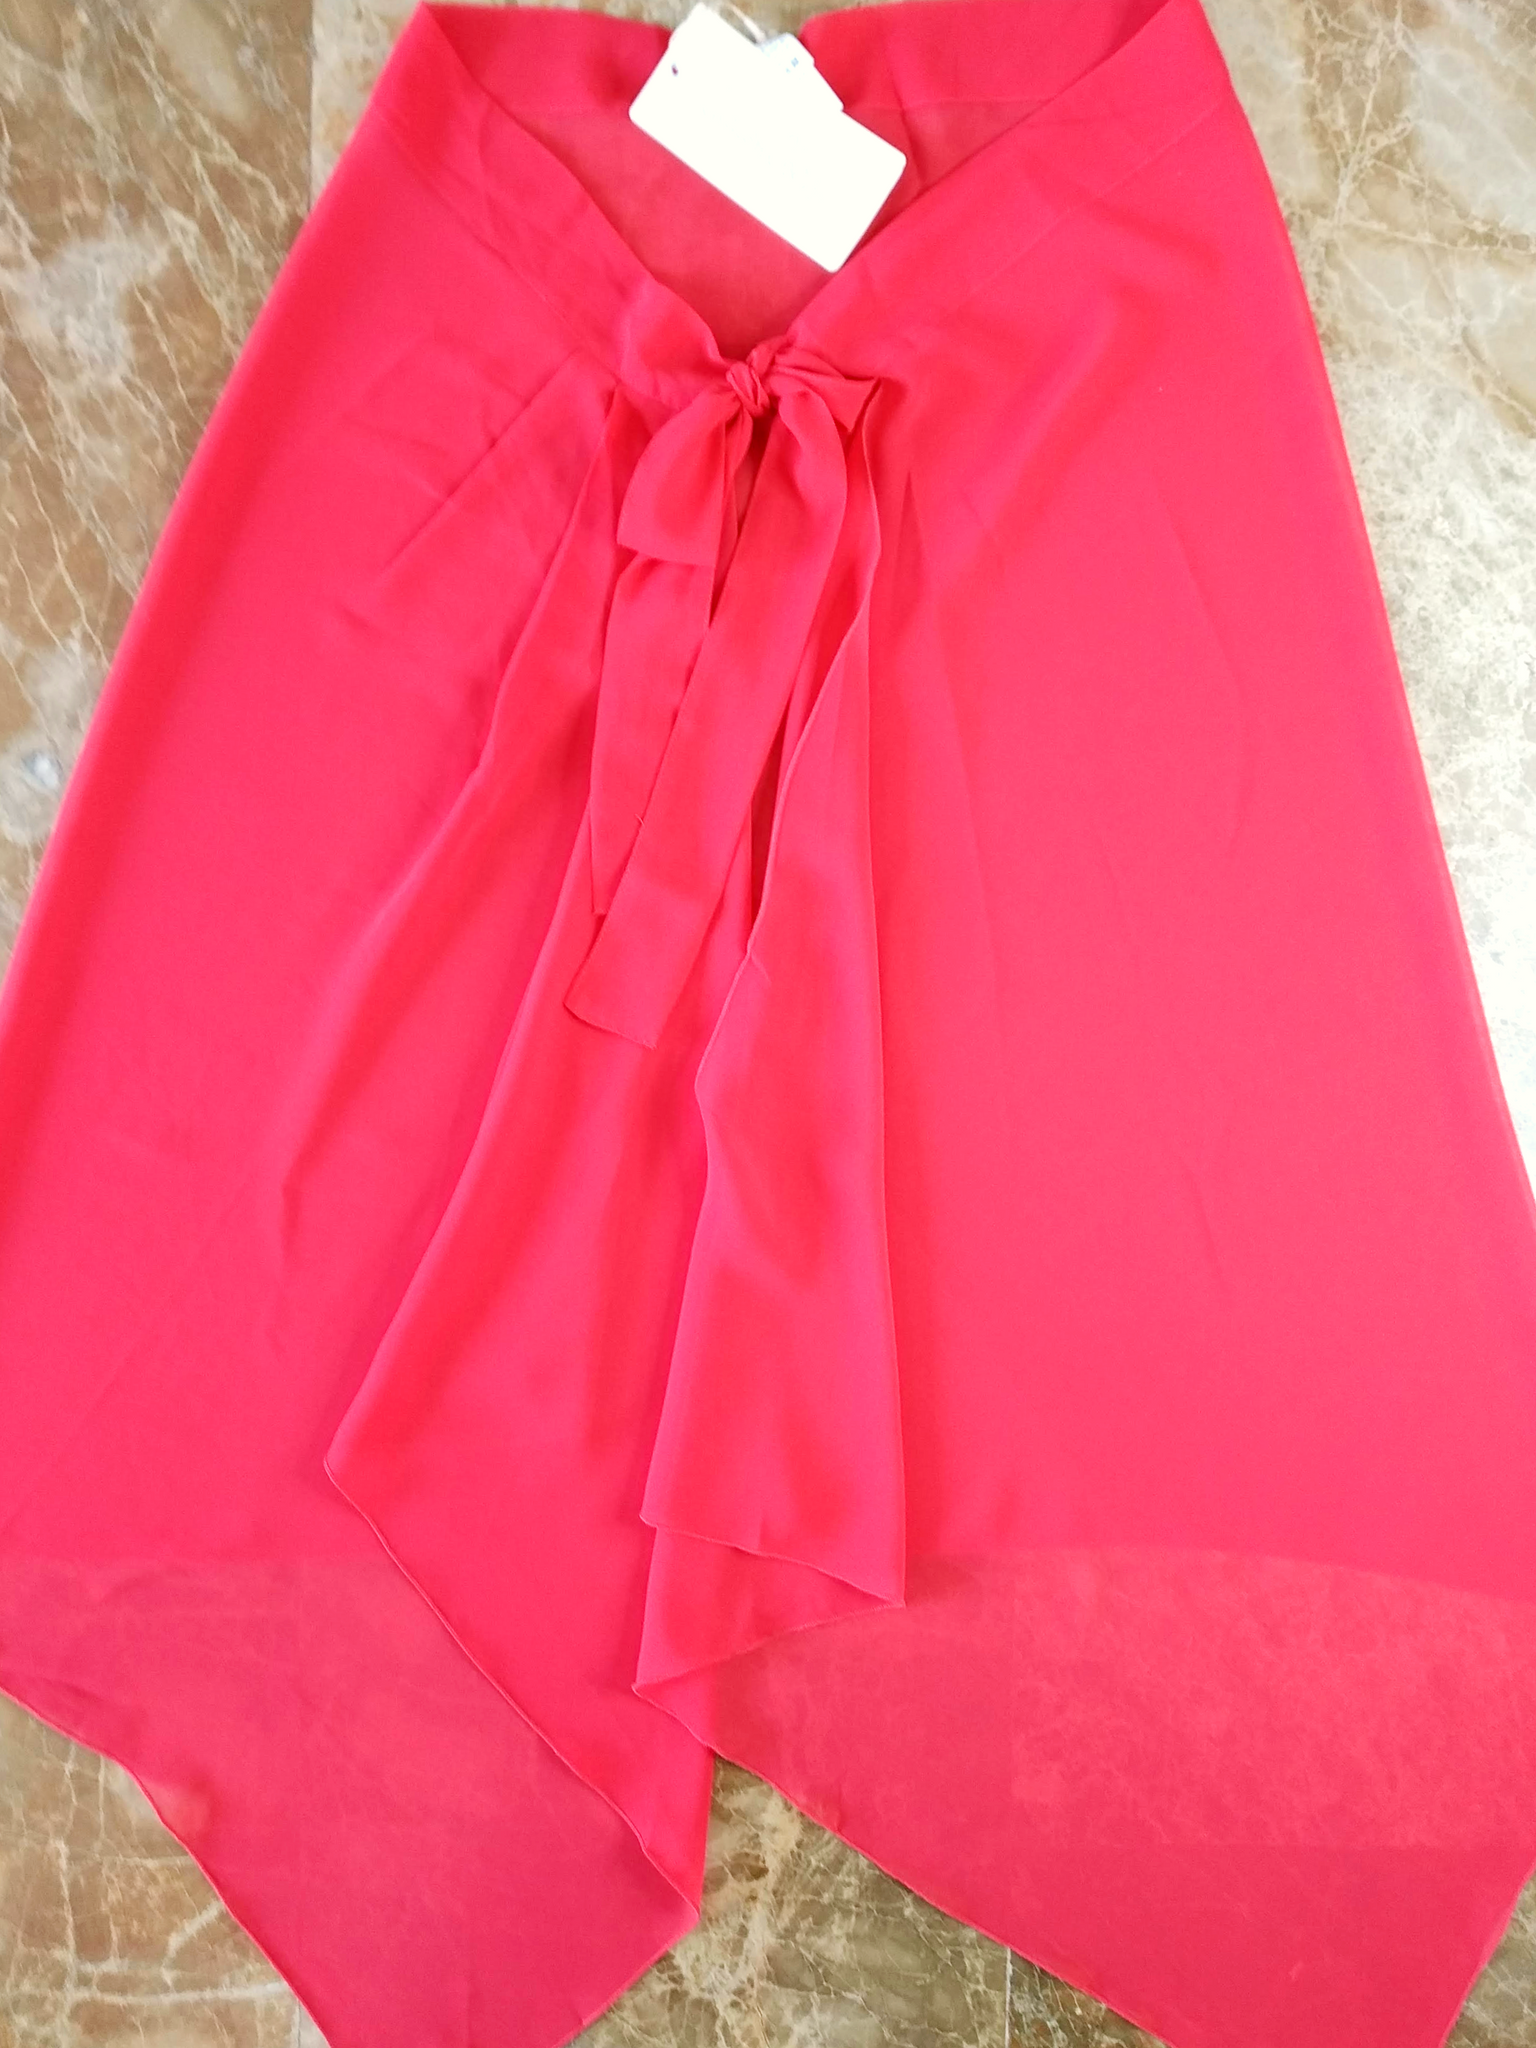 Red pareo skirt